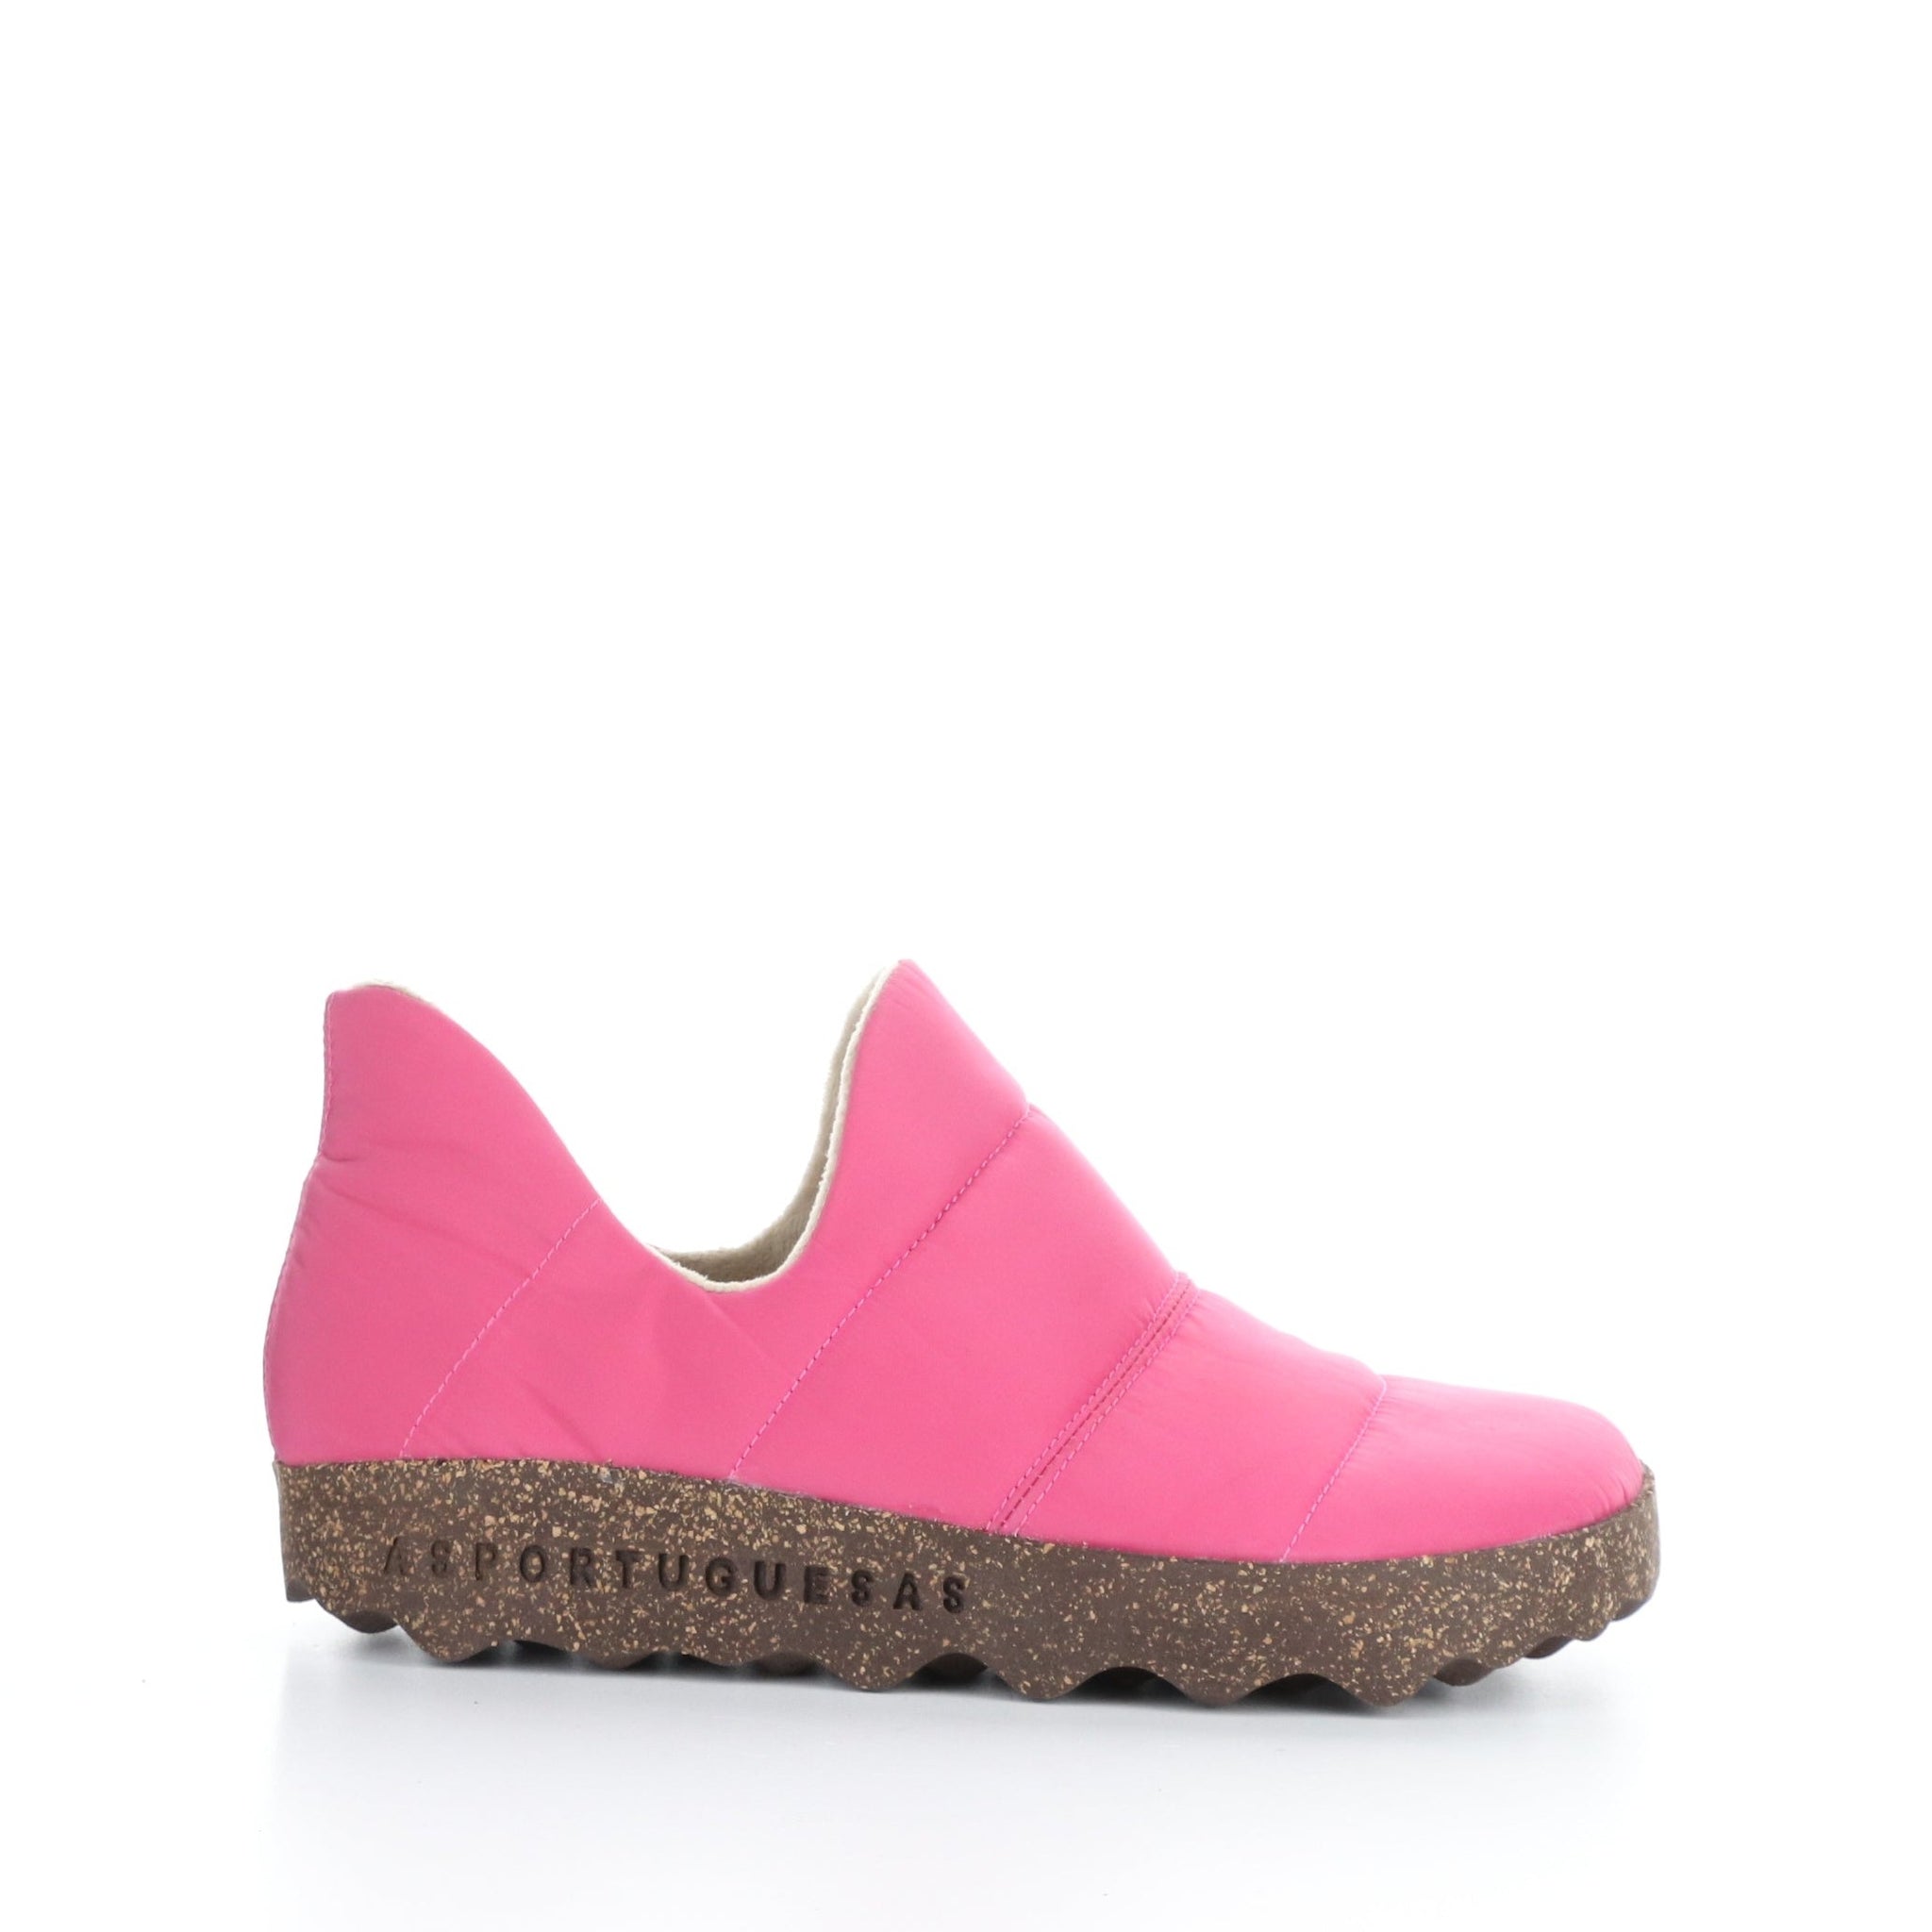 Asportugesas "Crus" Pink - Slip-on Shoe